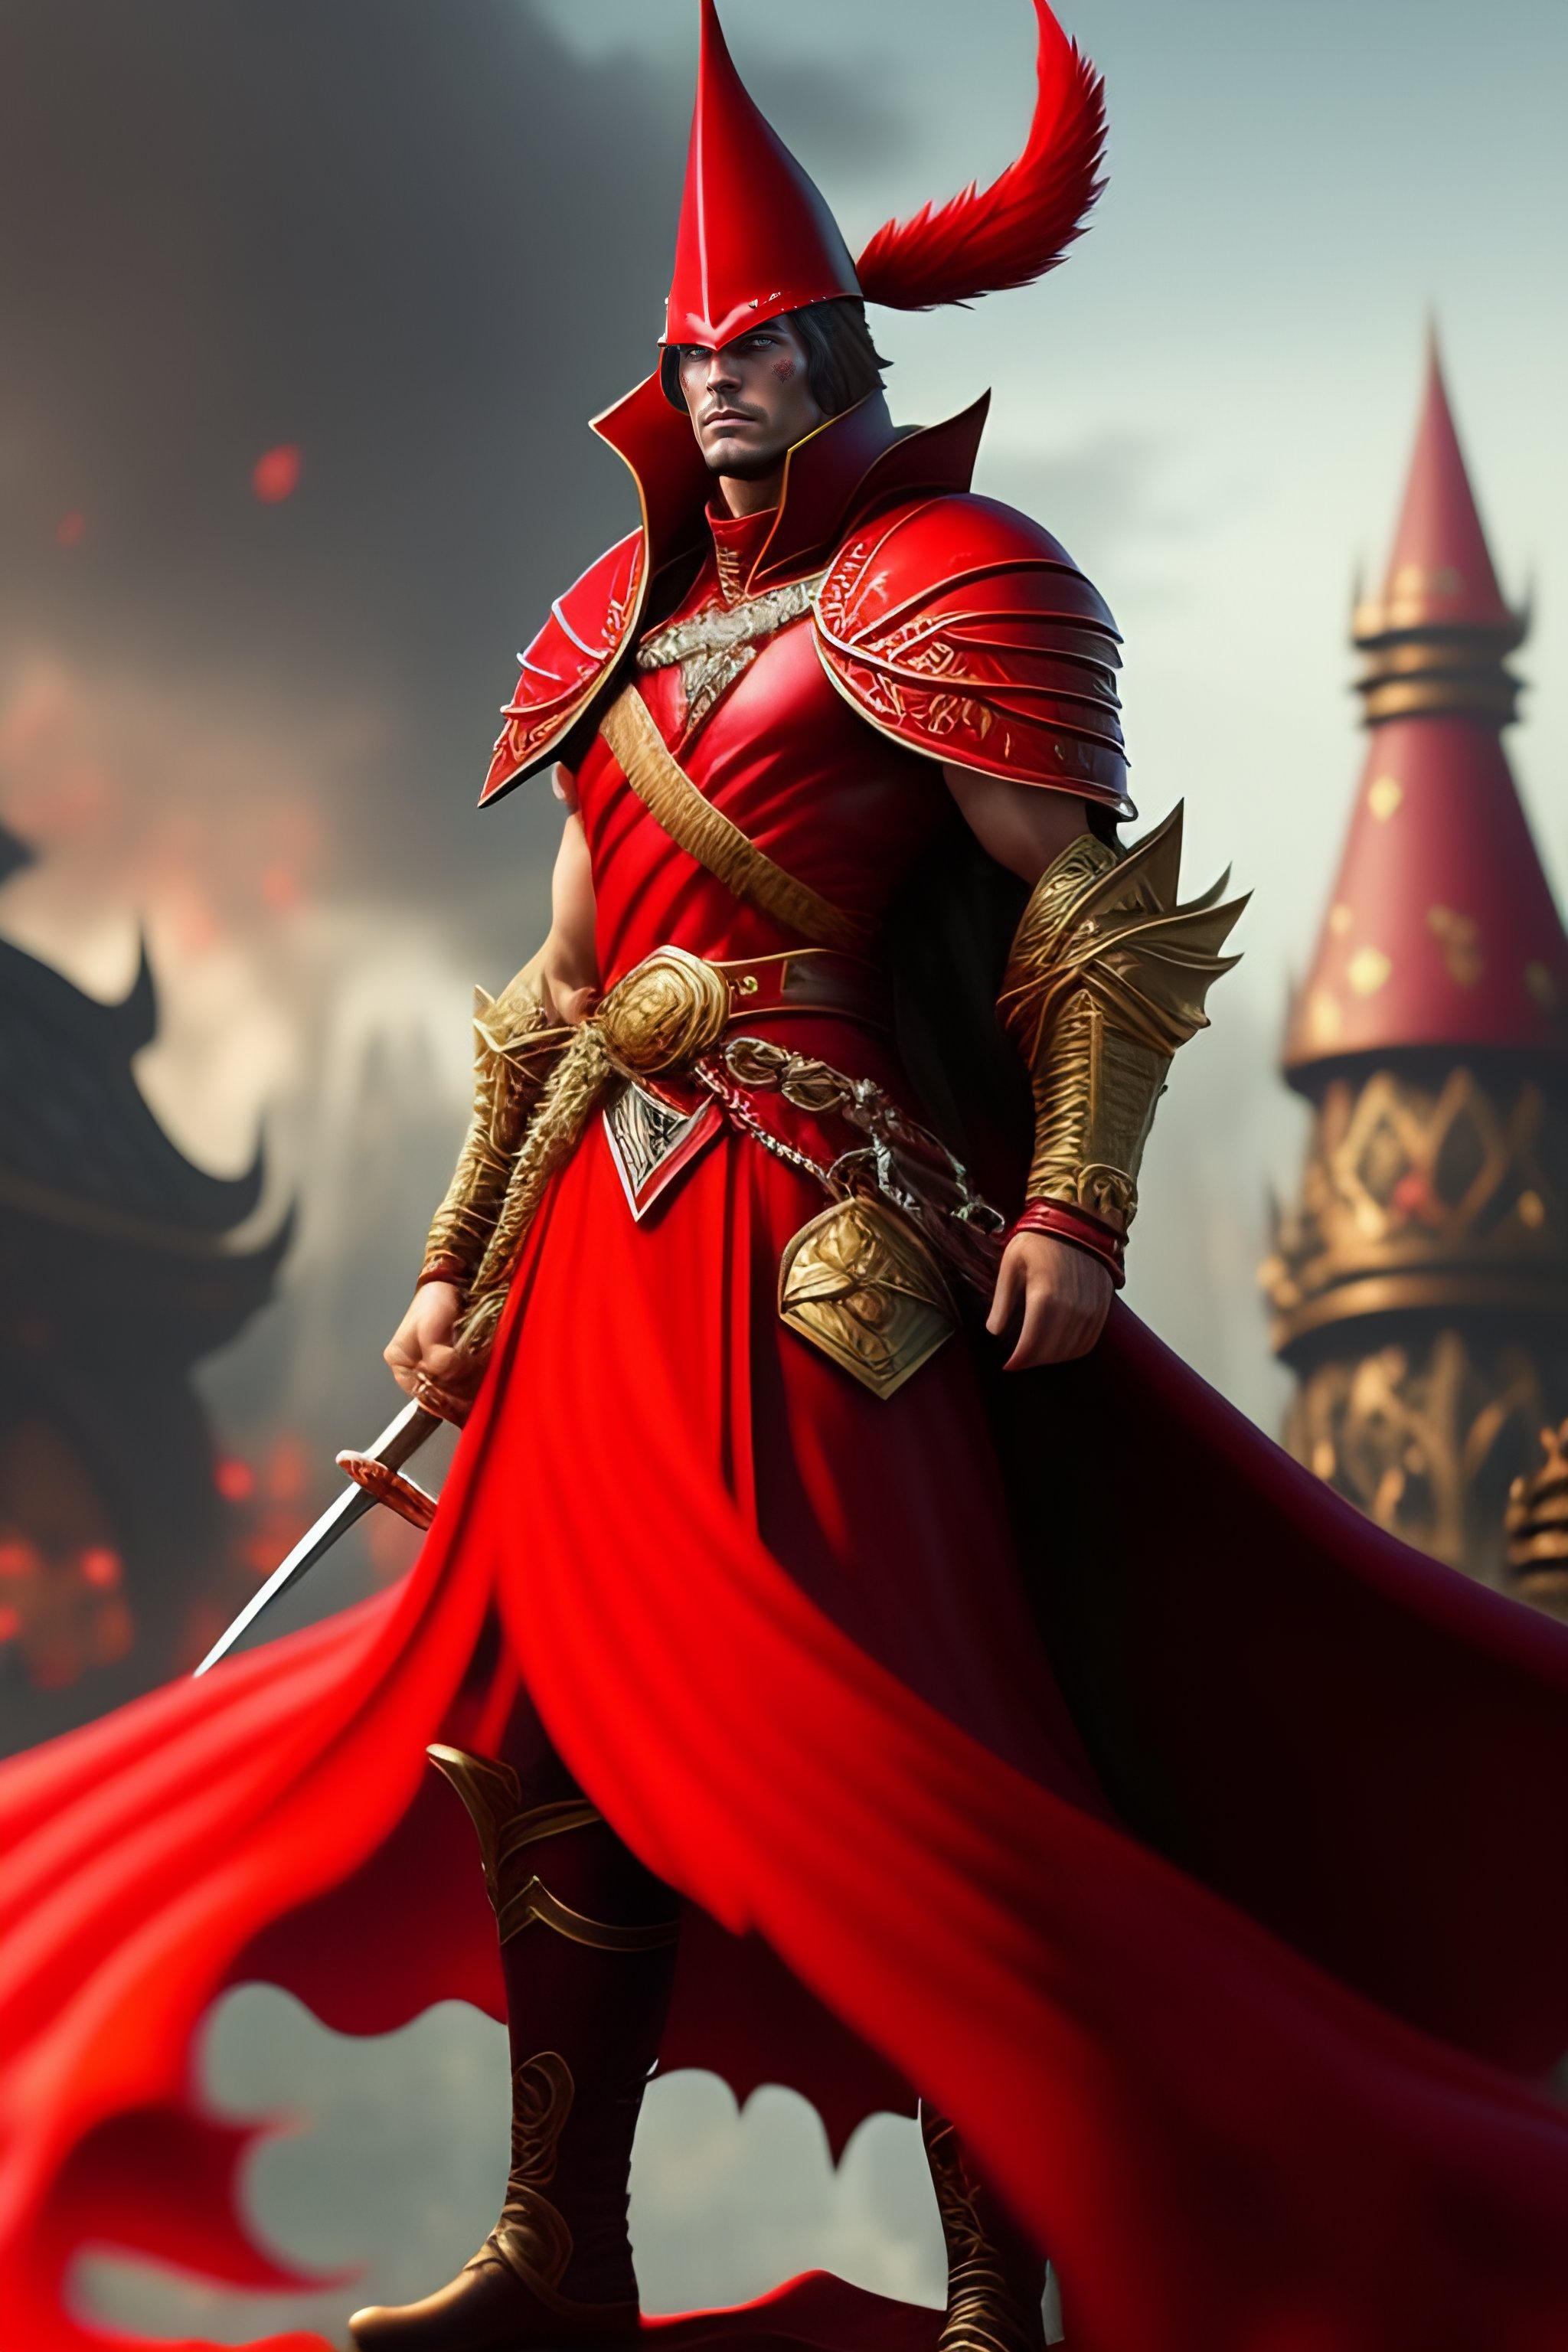 Lexica - Red villain of fantasy world